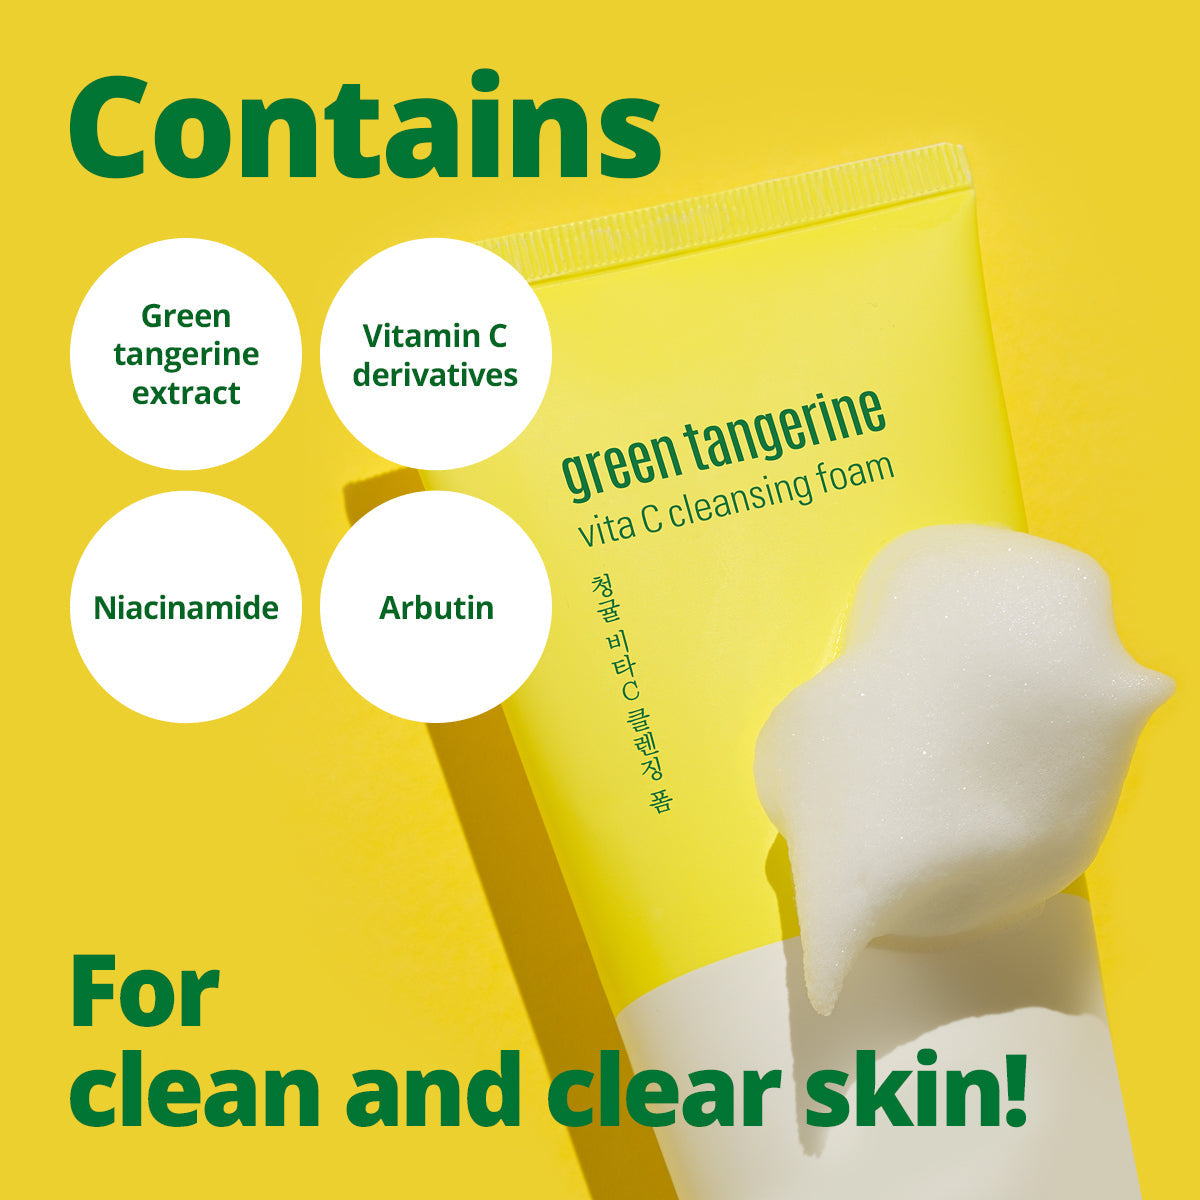 [Goodal] Espuma de Limpeza Facial Green Tangerine Vita C Cleansing Foam 150ml 🇰🇷